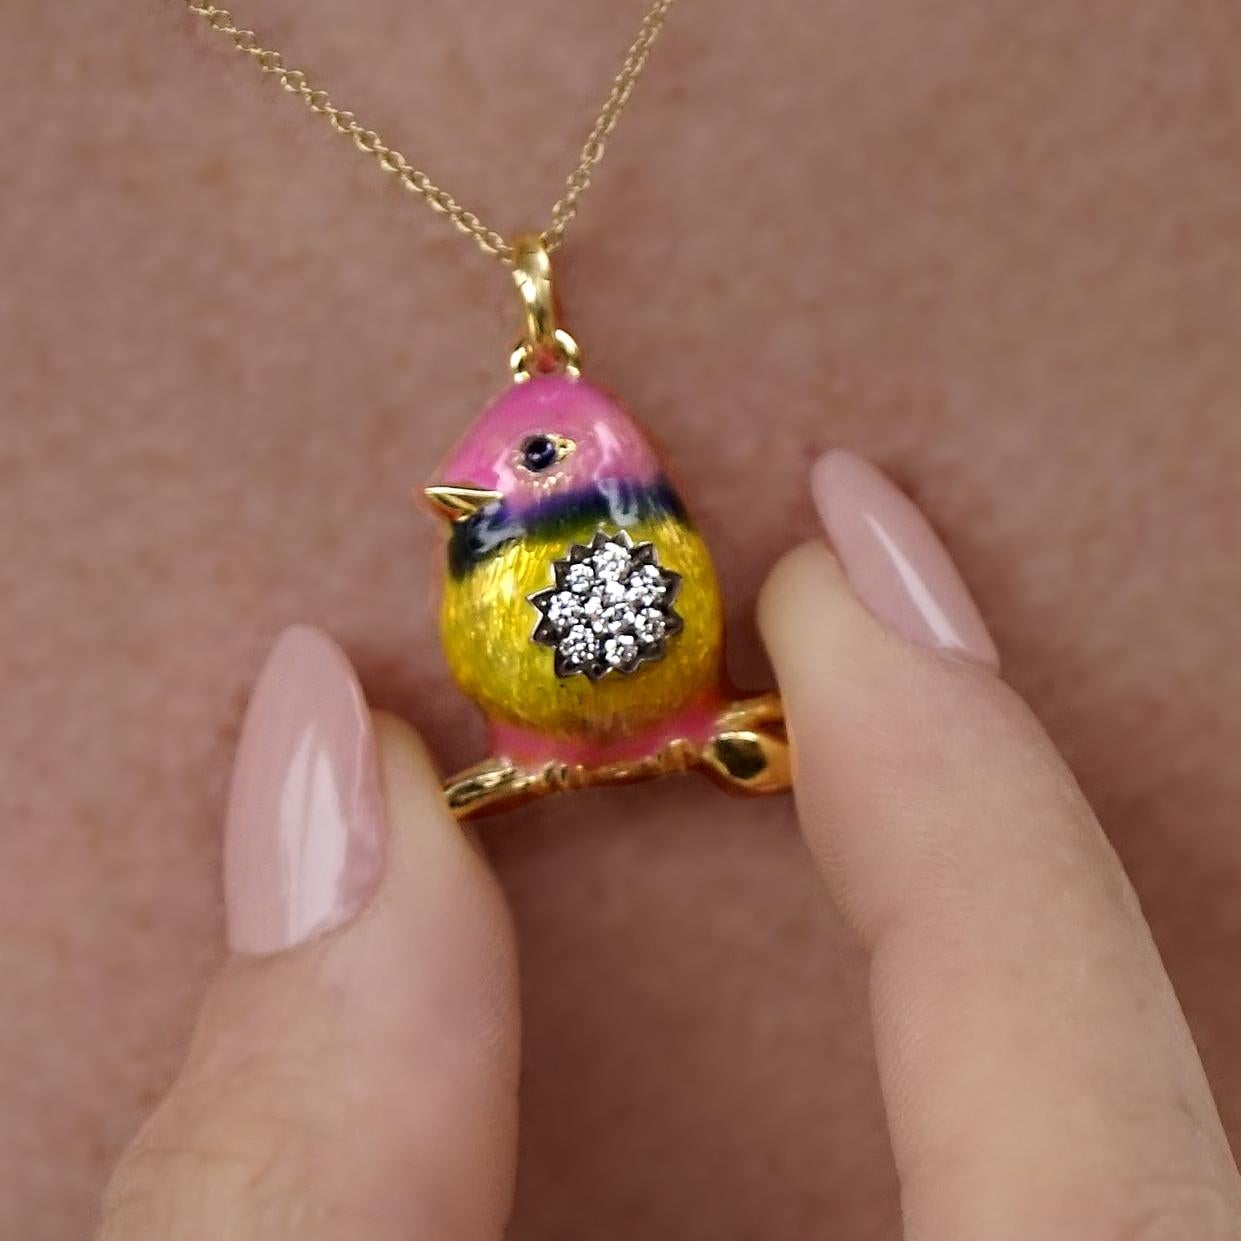 18 Karat Gold, Diamond and Enamel Rainbow Baby Bird Pendant Necklace 'Tweety' For Sale 1